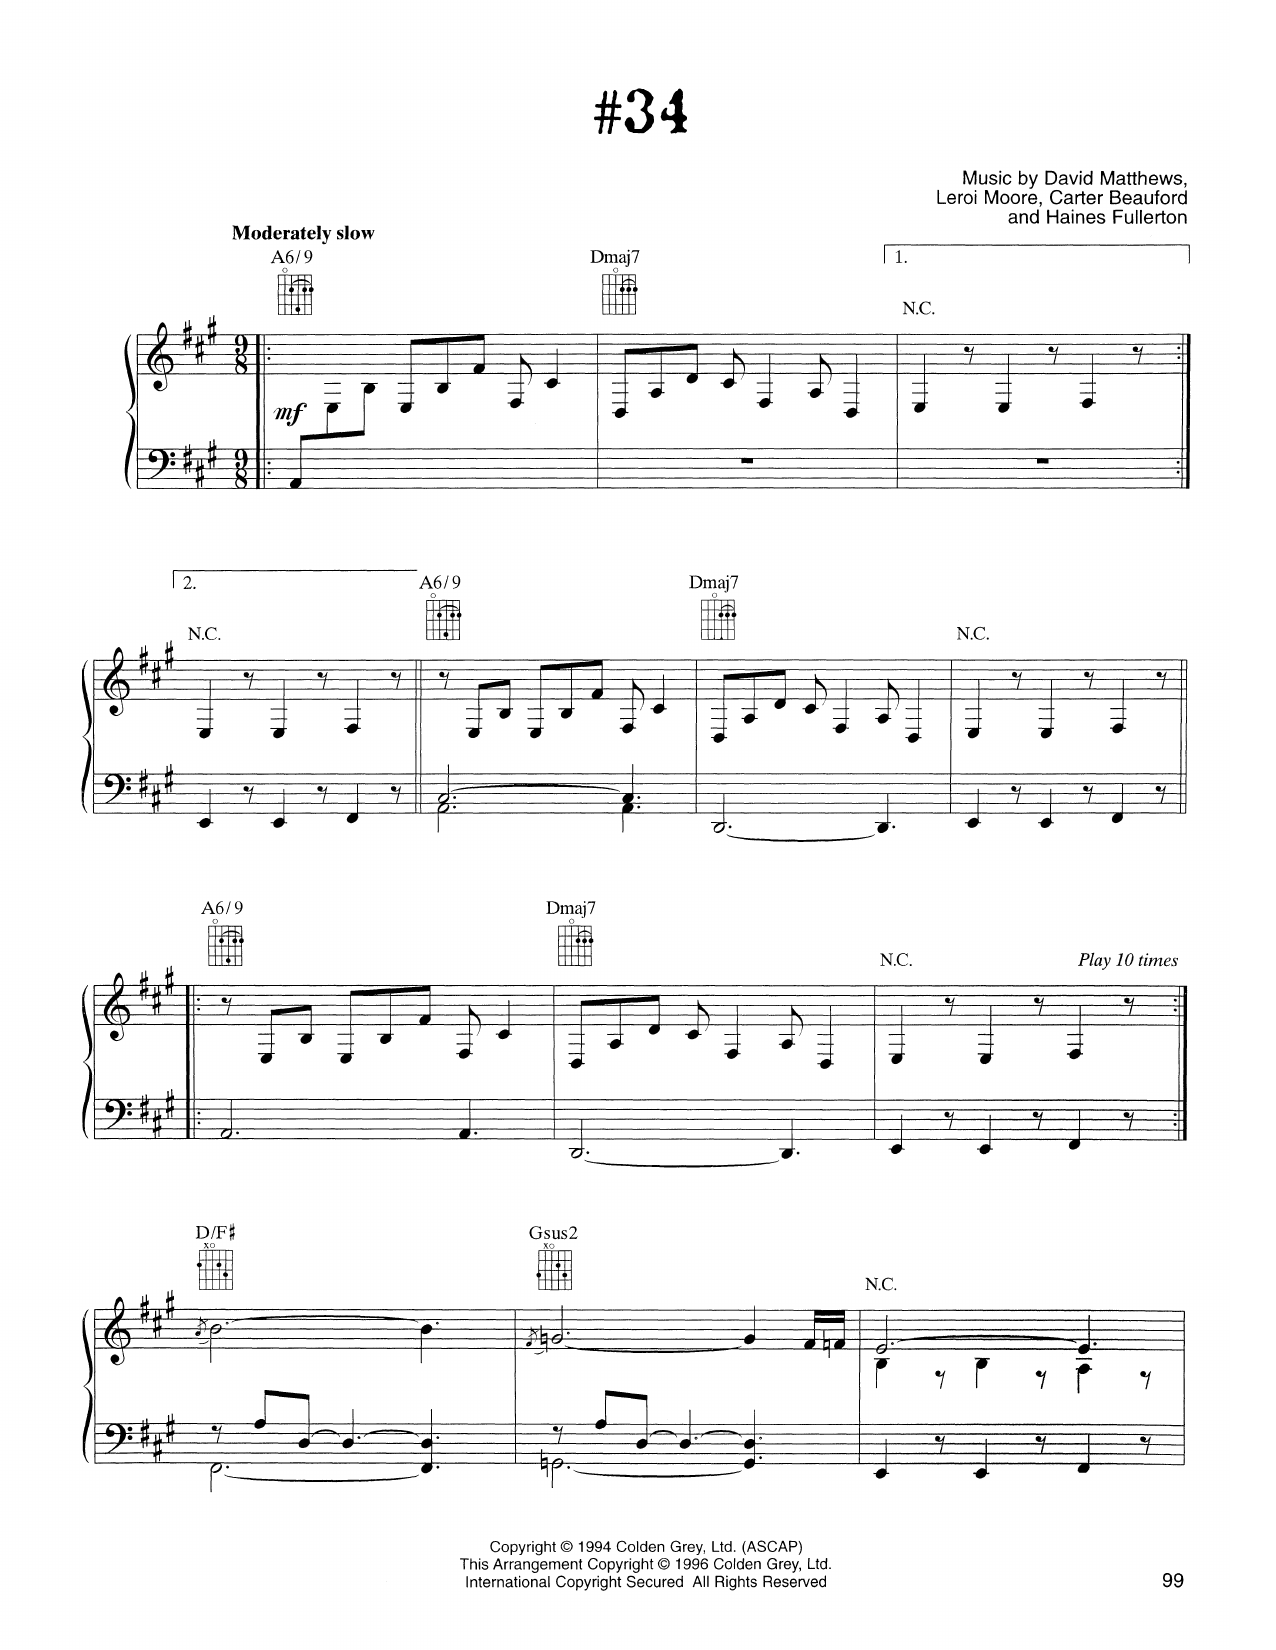 Dave Matthews Band #34 Sheet Music Notes & Chords for Guitar Tab - Download or Print PDF